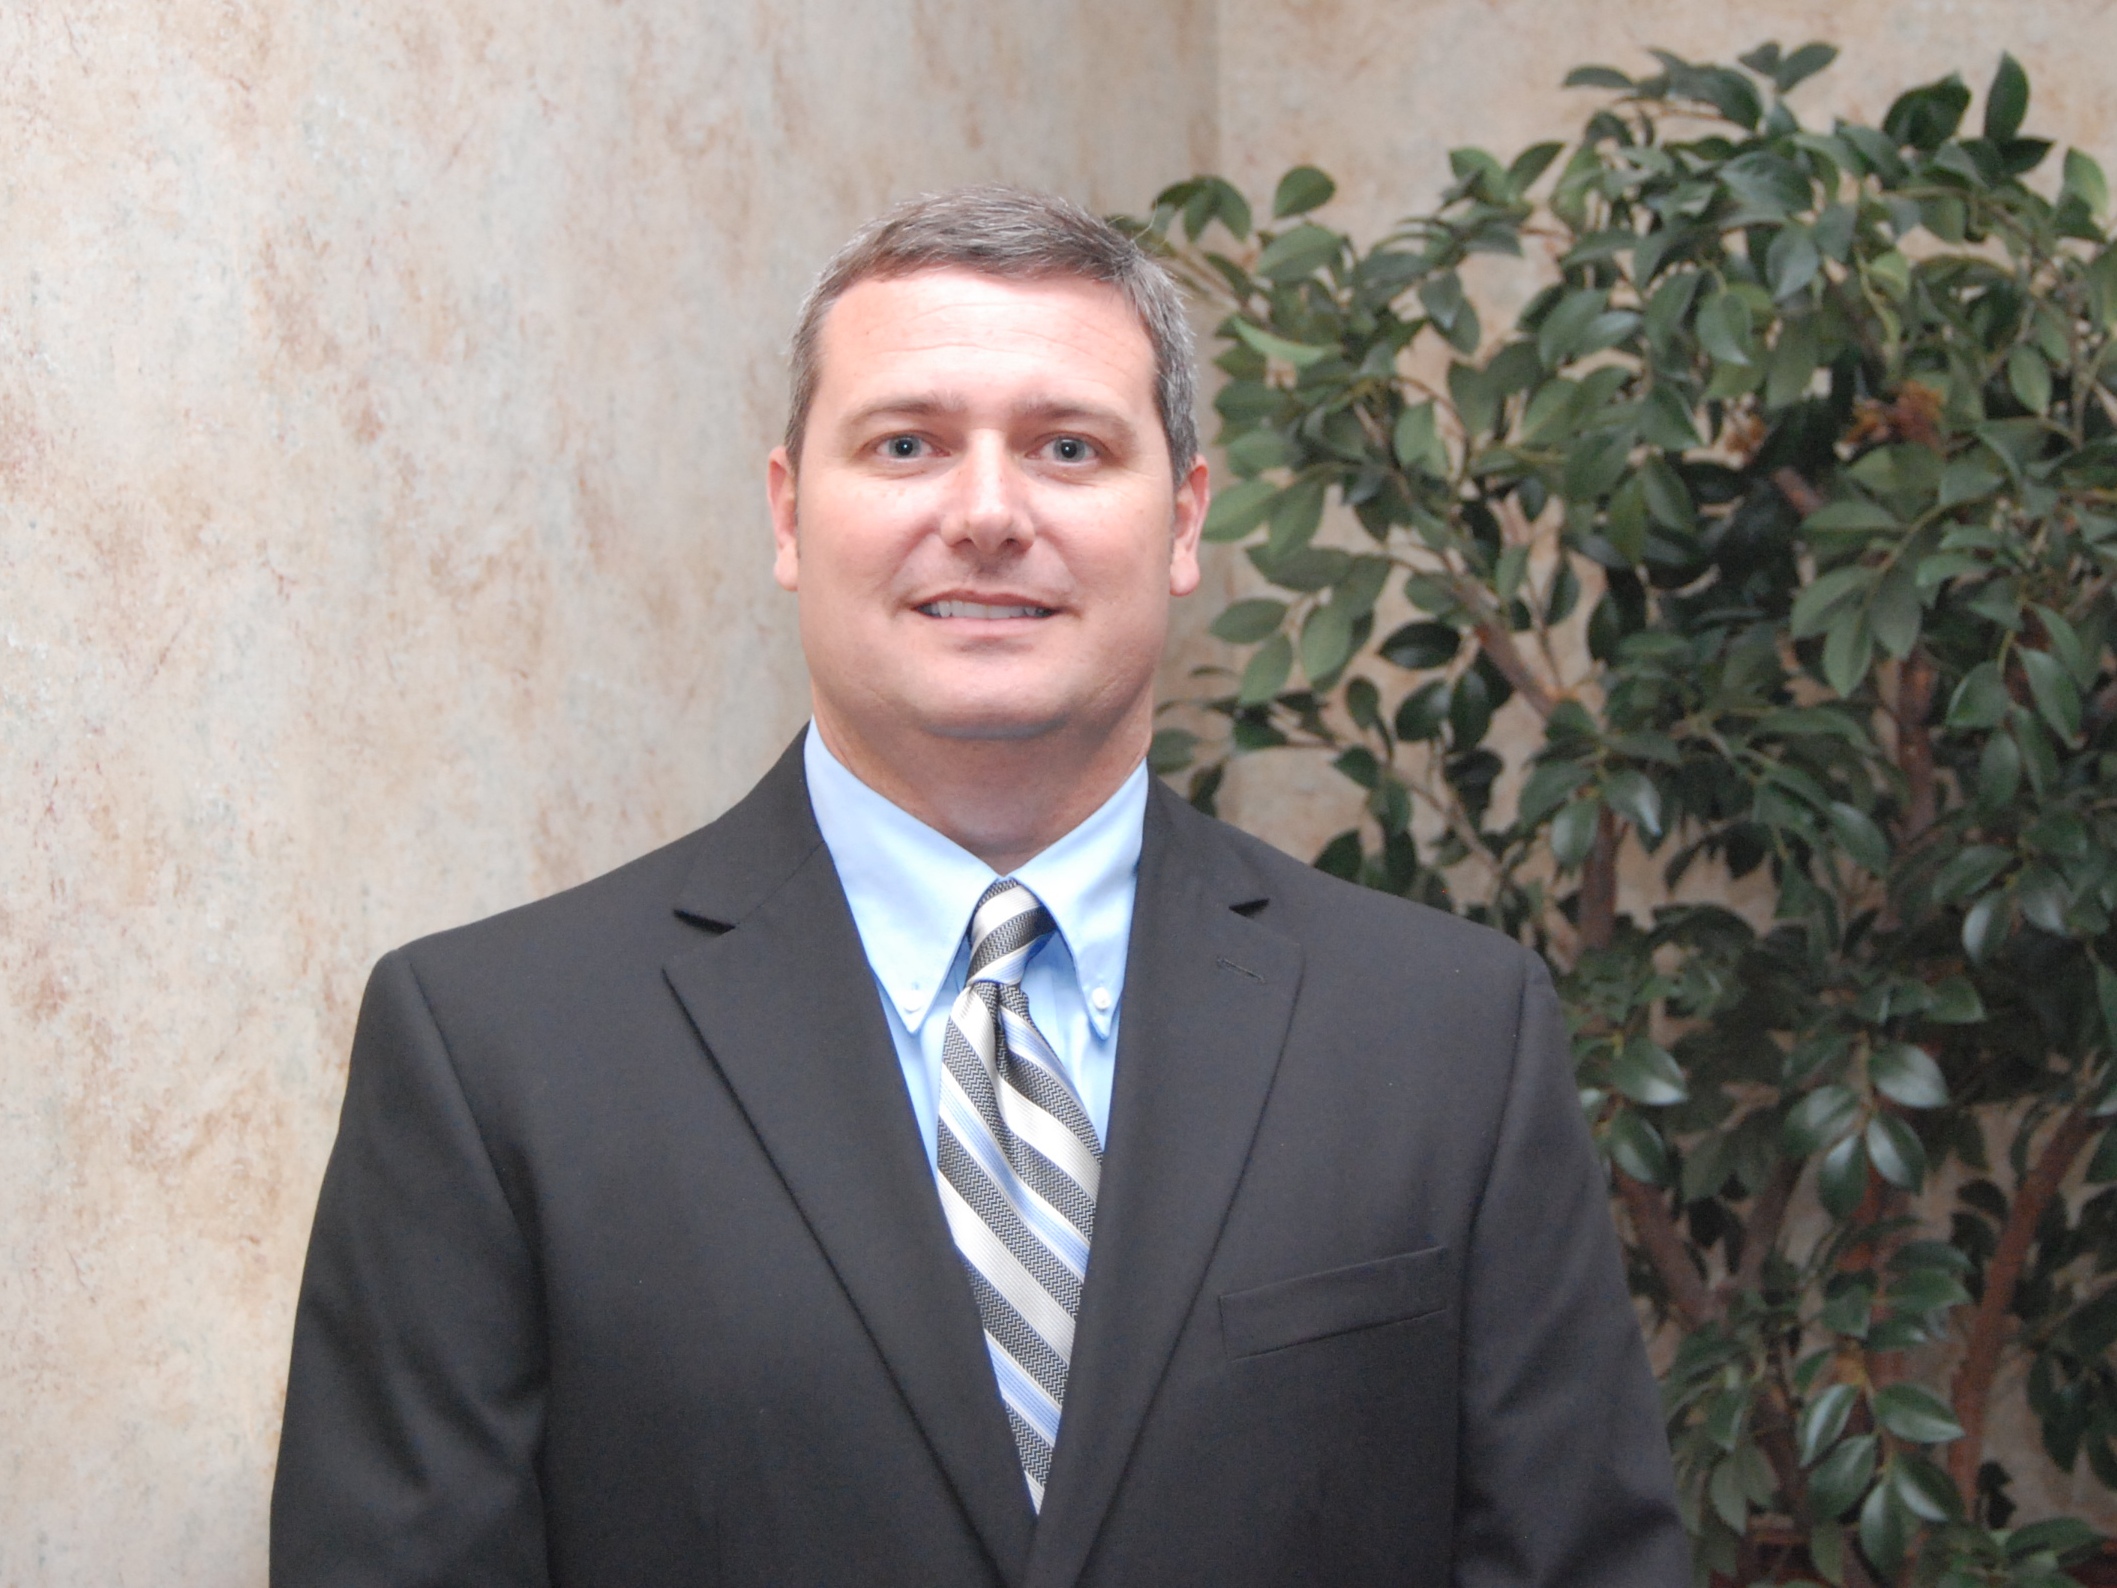 Meet the Manager:
Robert Walker
BO - Branch Manager/Loan Officer